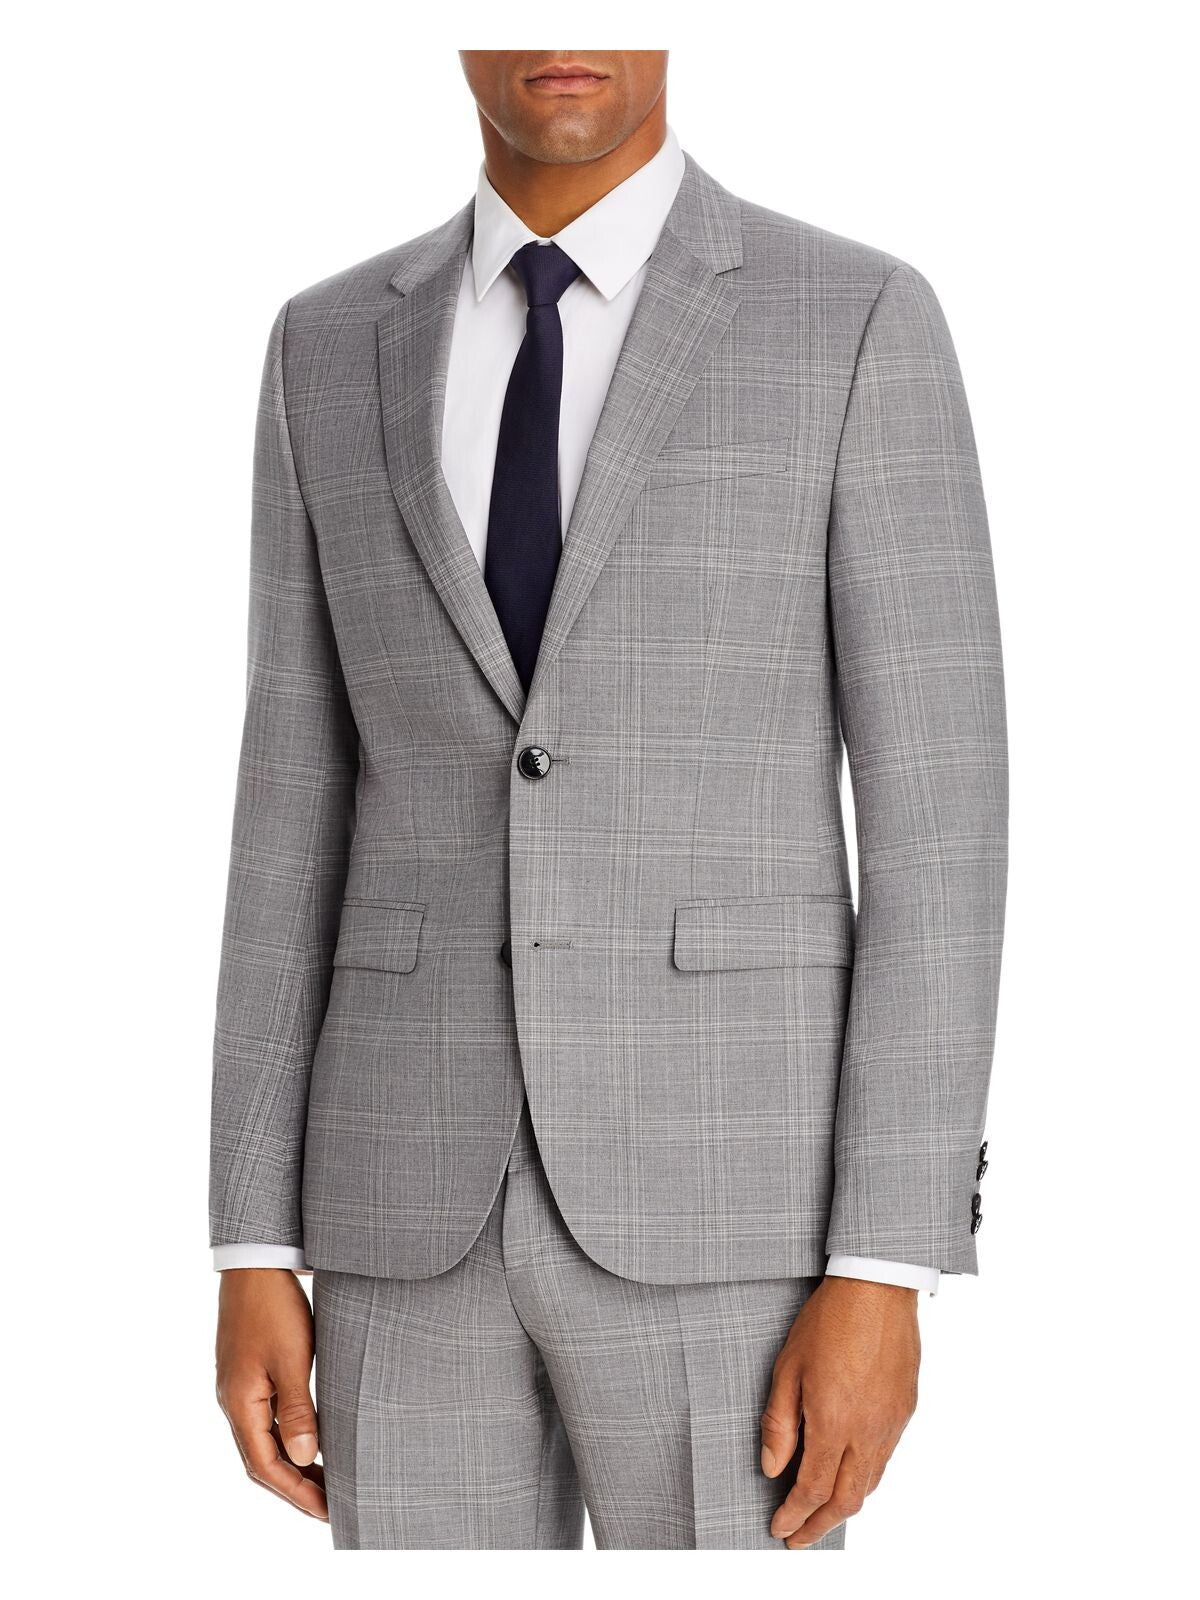 HUGO BOSS Mens Gray Plaid Extra Slim Fit Suit Separate Blazer Jacket 36R